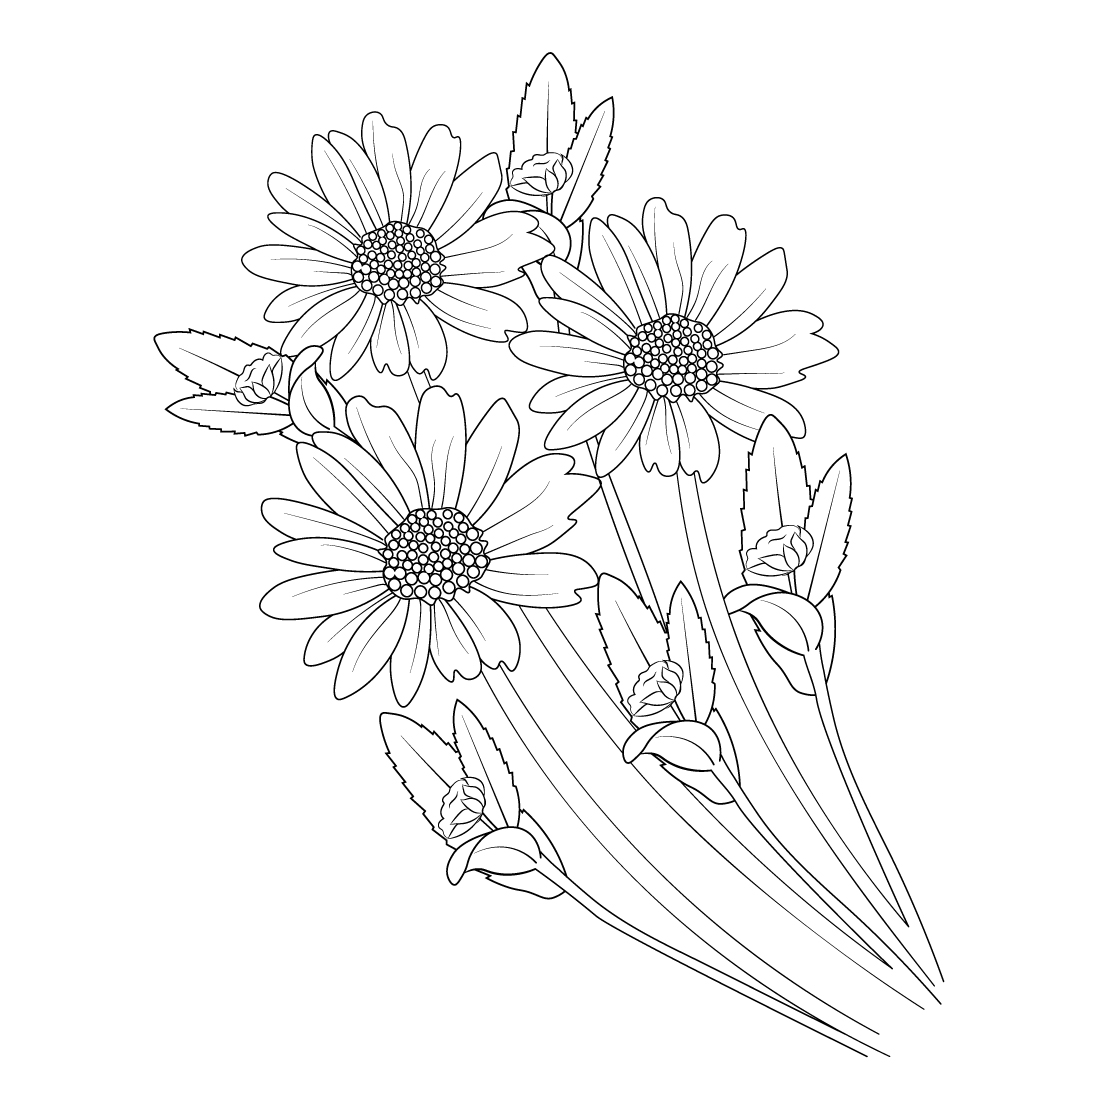 Daisy flower drawing daisy flower vector art, daisy flower vector, daisy illustration, preview image.